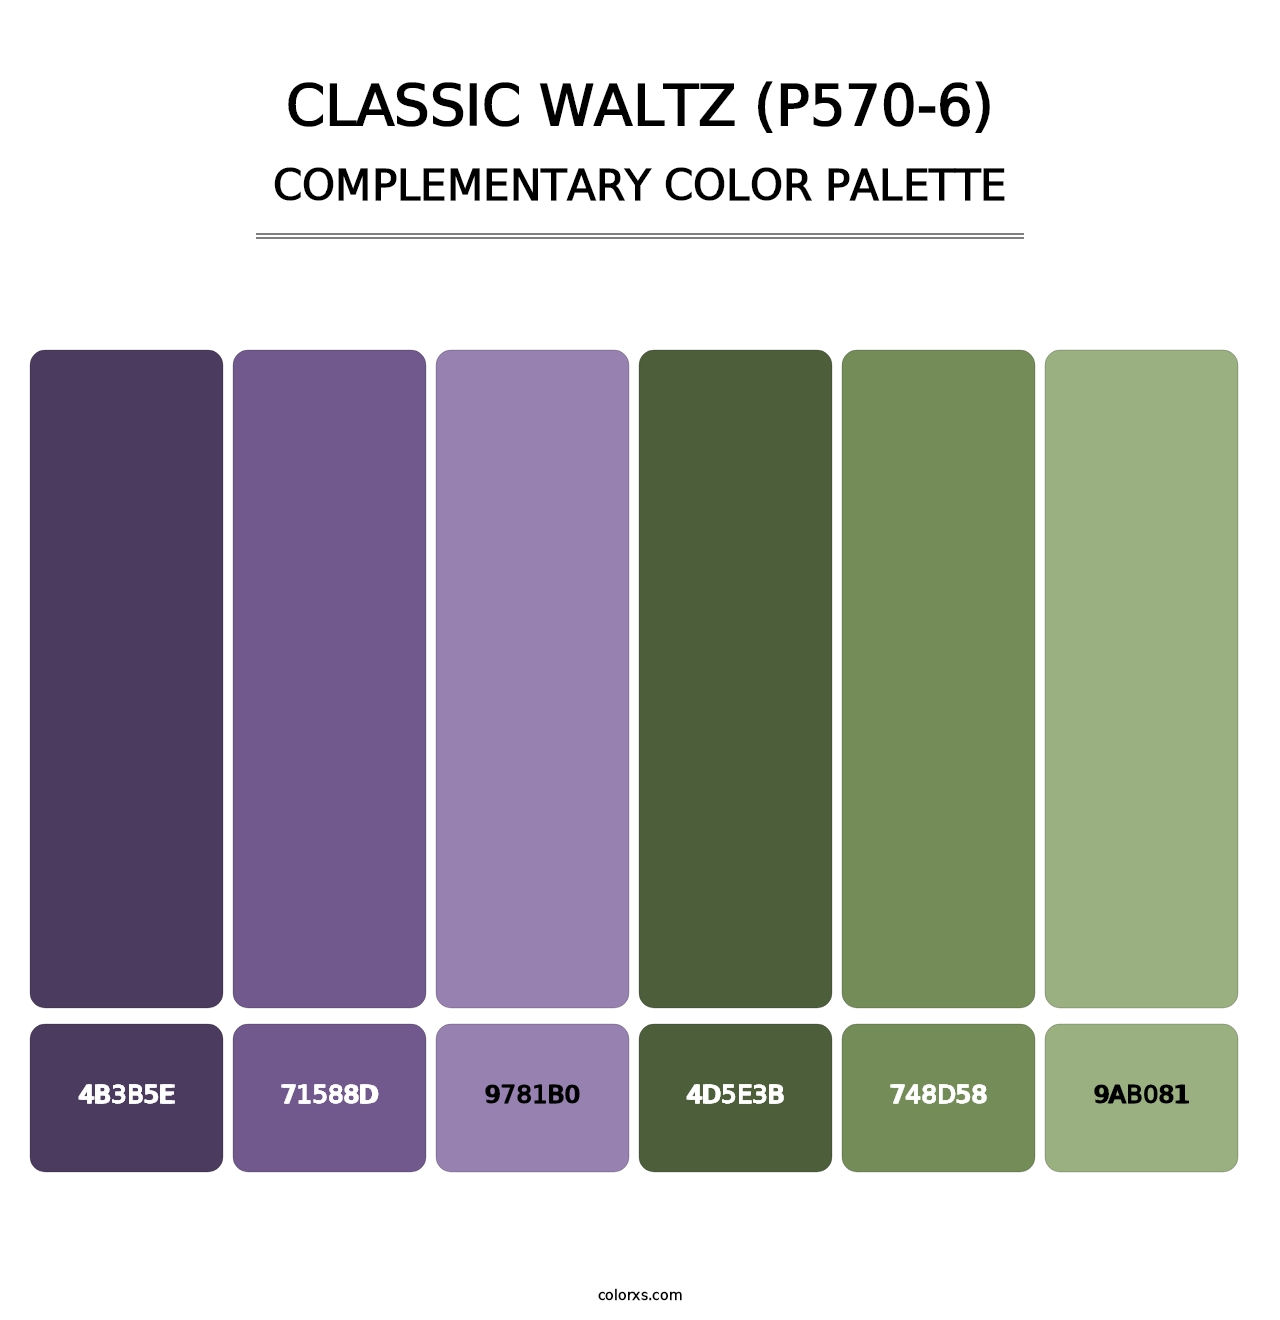 Classic Waltz (P570-6) - Complementary Color Palette